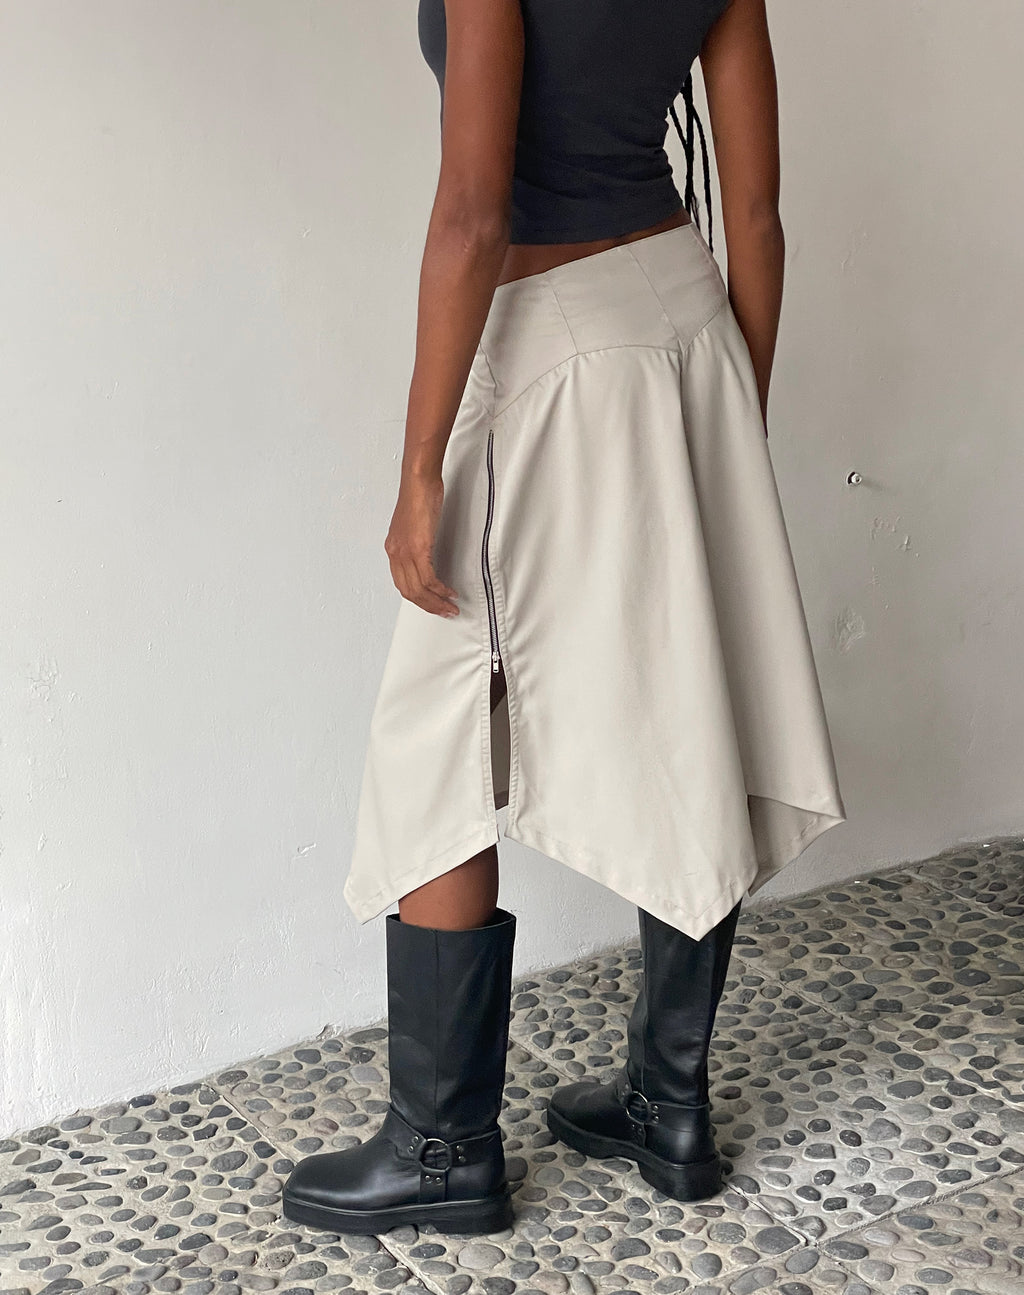 MOTEL X JACQUIE Karsyn Asymmetric Midi Skirt in Oat